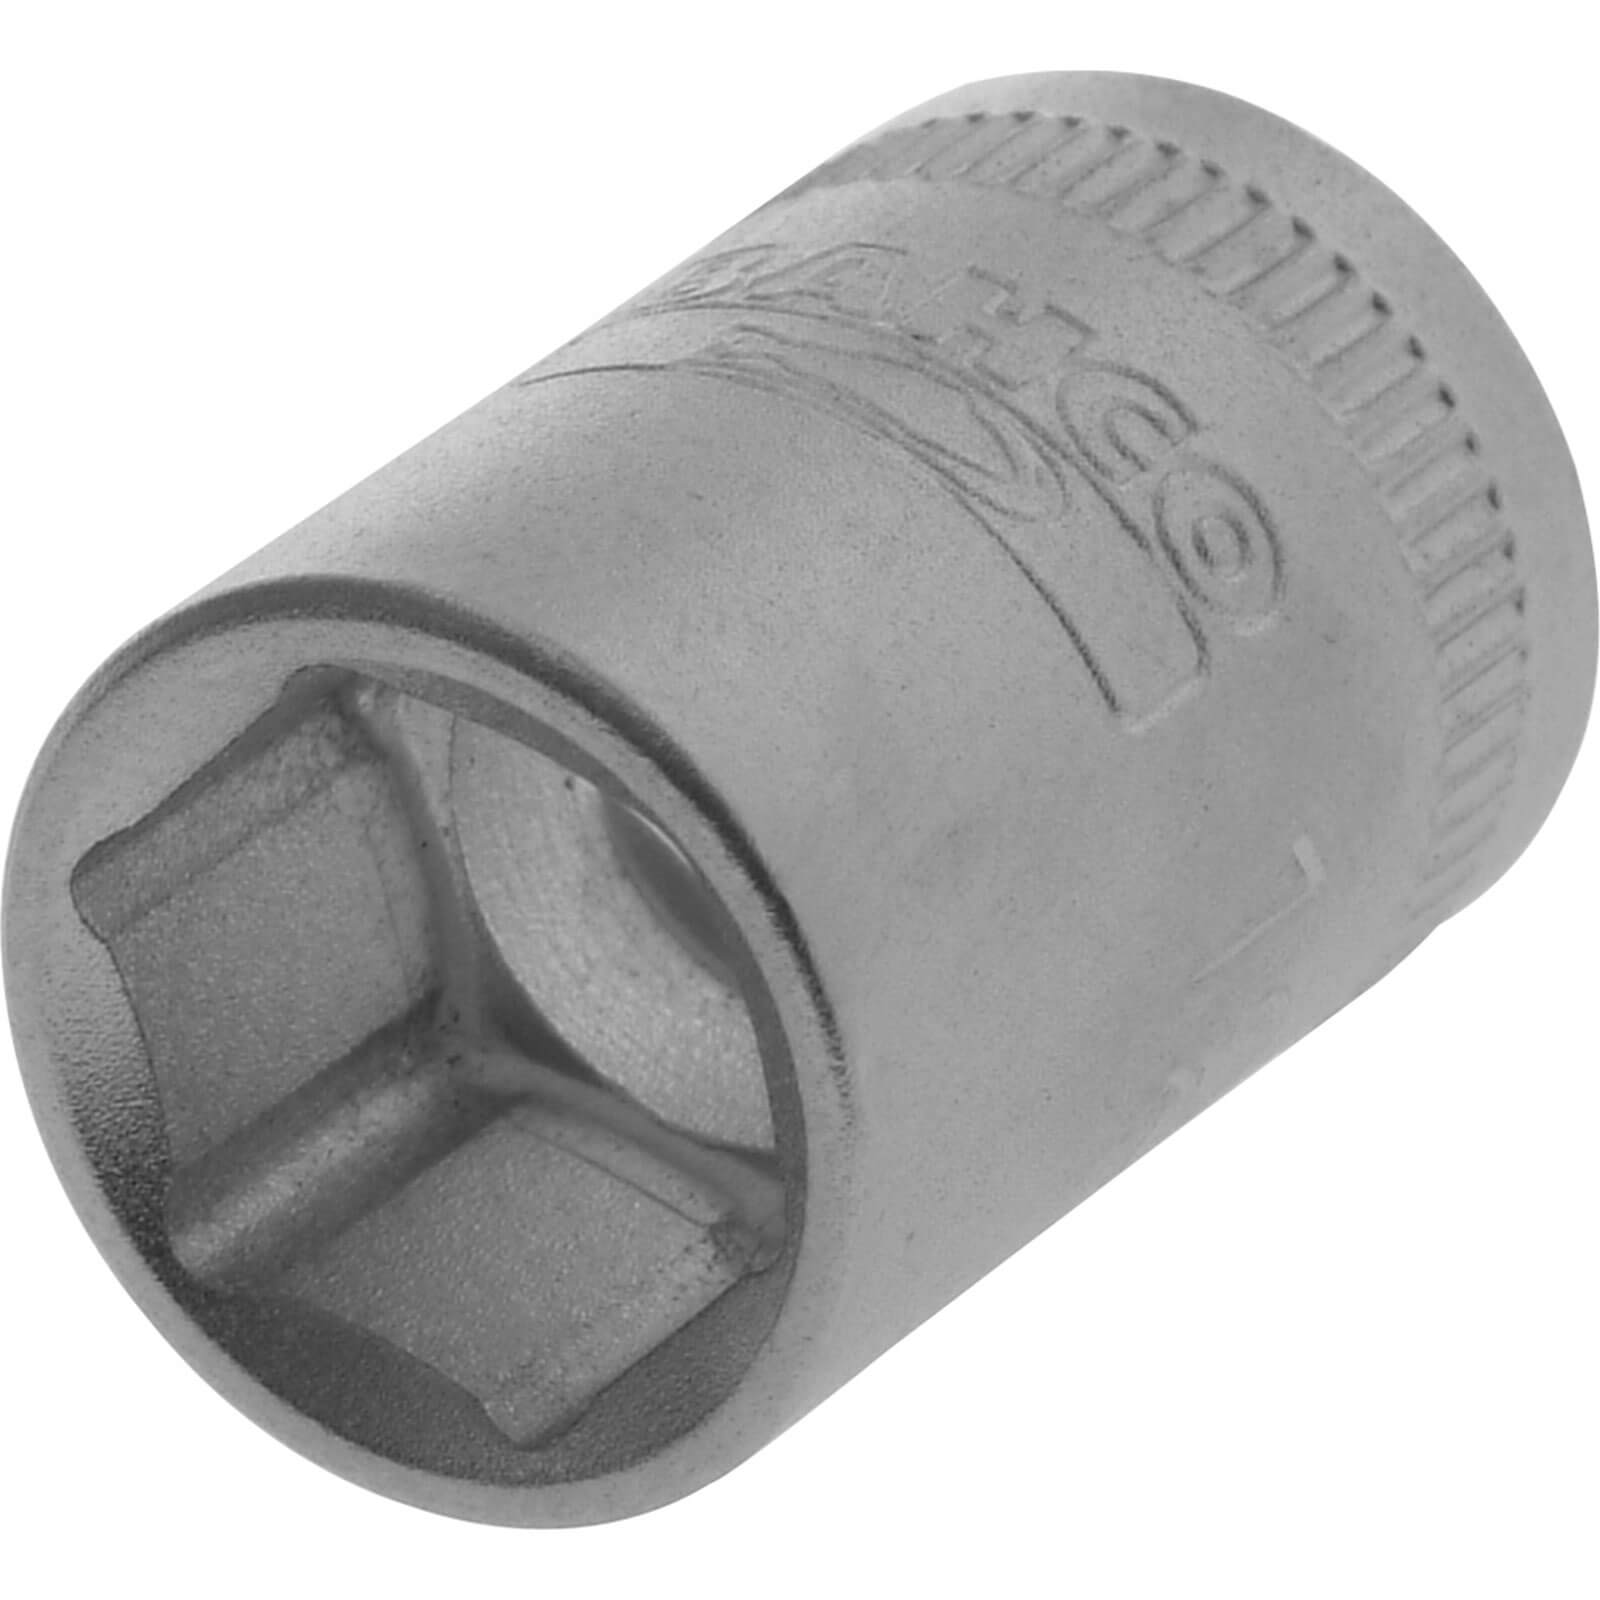 Image of Bahco 3/8" Drive Hexagon Socket Metric 3/8" 14mm